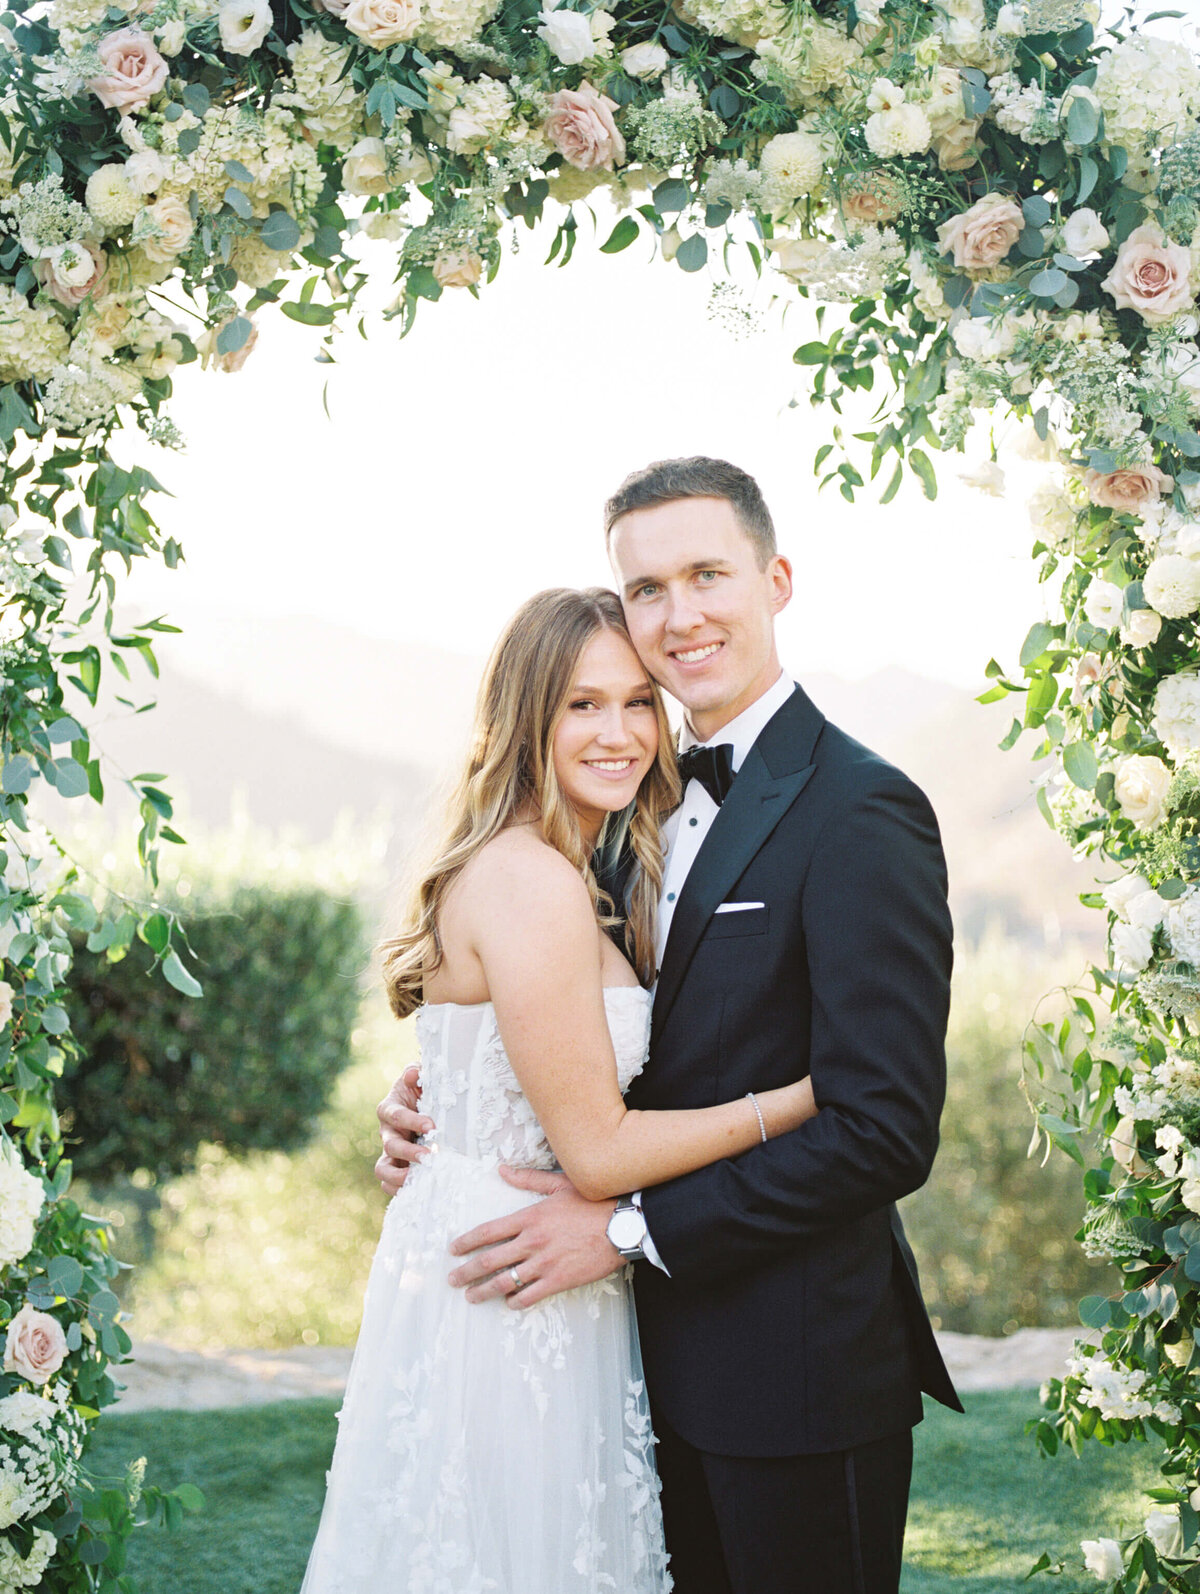 Lisa-Leanne-Photography_Cielo-Farms-Wedding_Malibu-Wedding_Southern-California-Wedding-Photographer_49